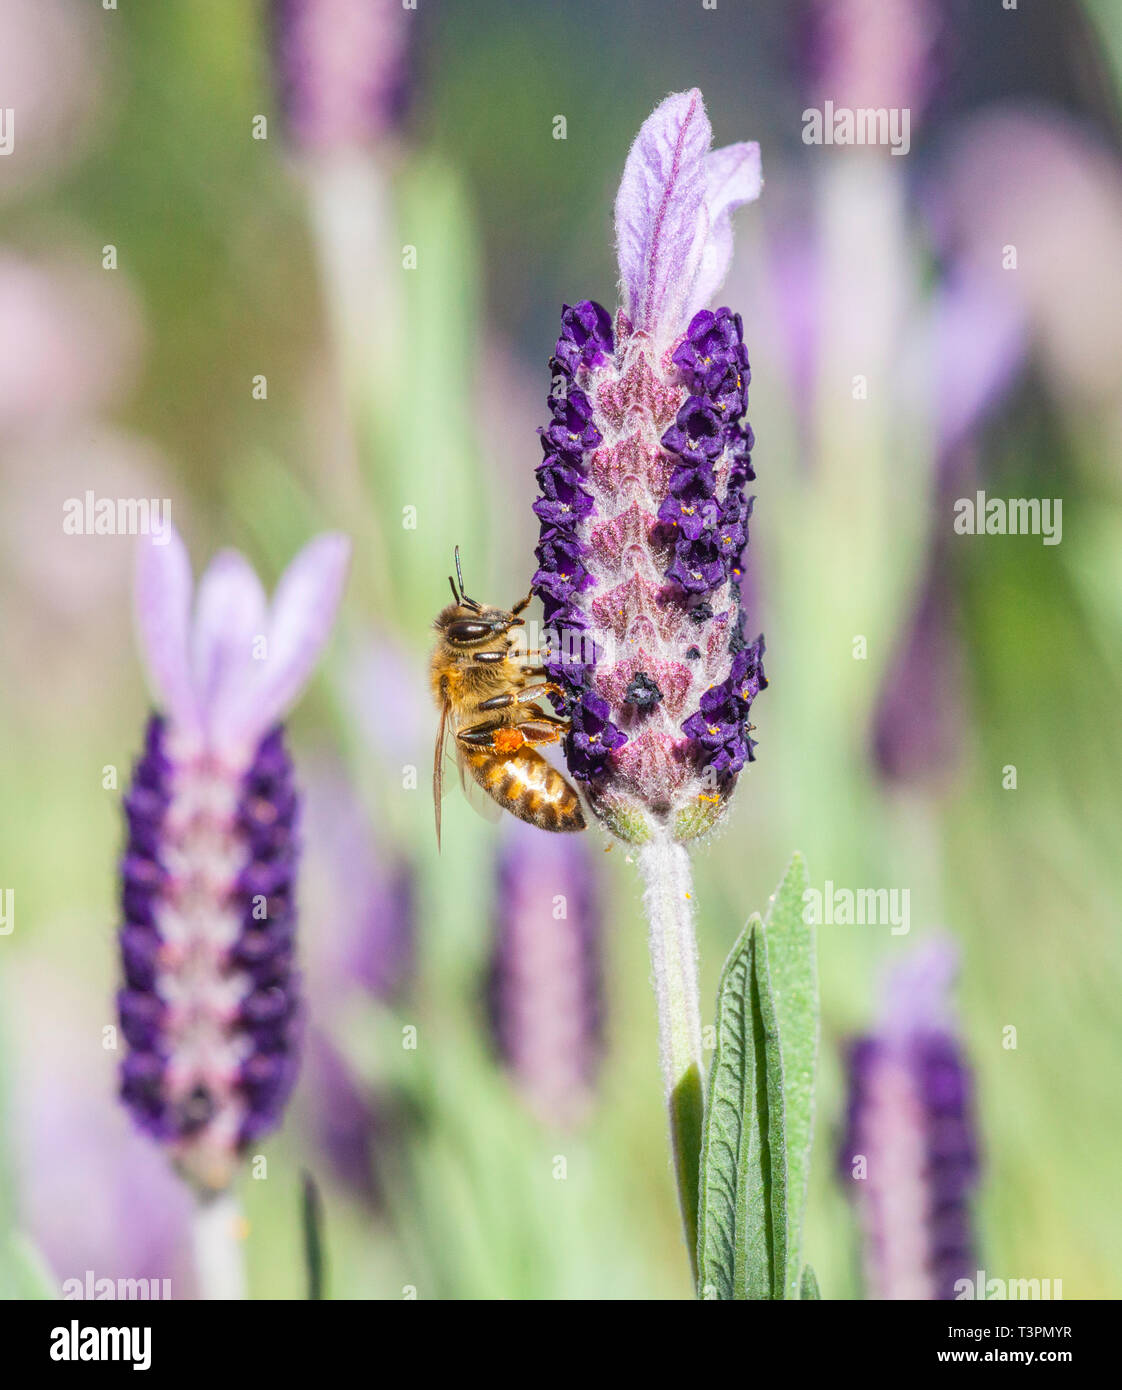 Abeja de Miel europea ( Apis mellifera ) en una flor de lavanda francesa ( Lavandula stoechas ). También conocida como La Abeja de Miel occidental. Foto de stock